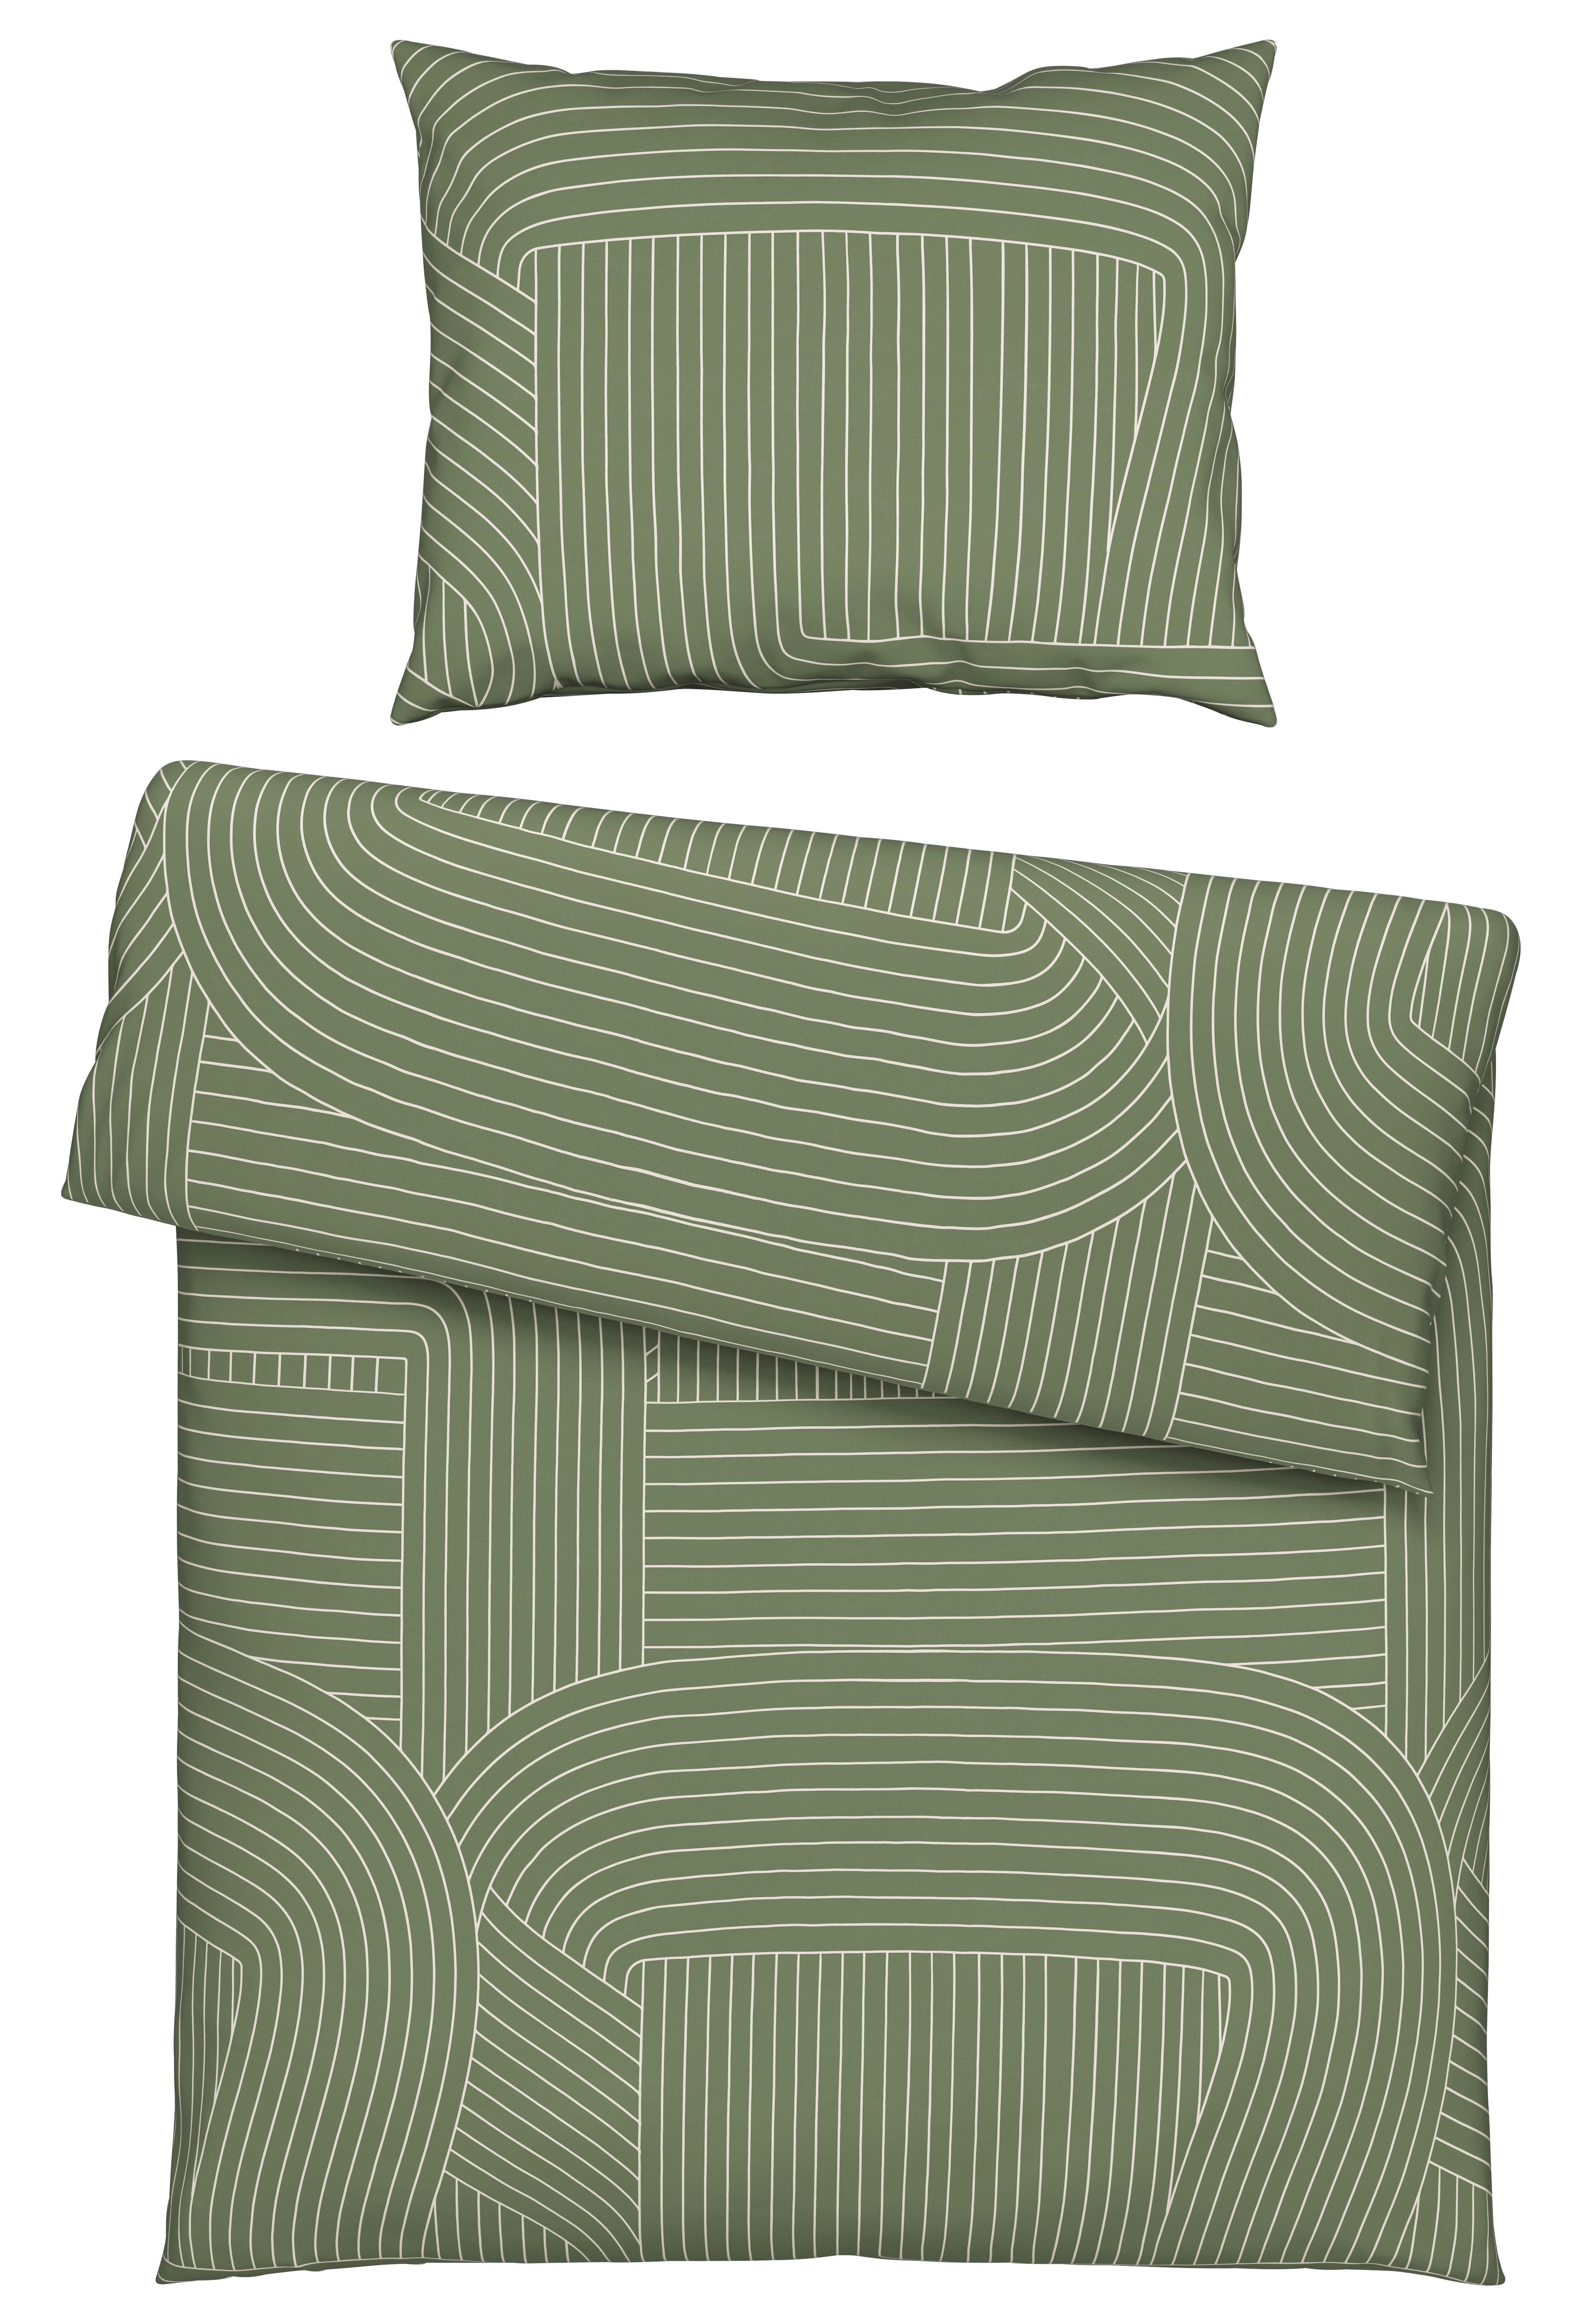 Posteľná Bielizeň Scribble, 140/200cm - zelená/béžová, Moderný, textil (140/200cm) - Modern Living